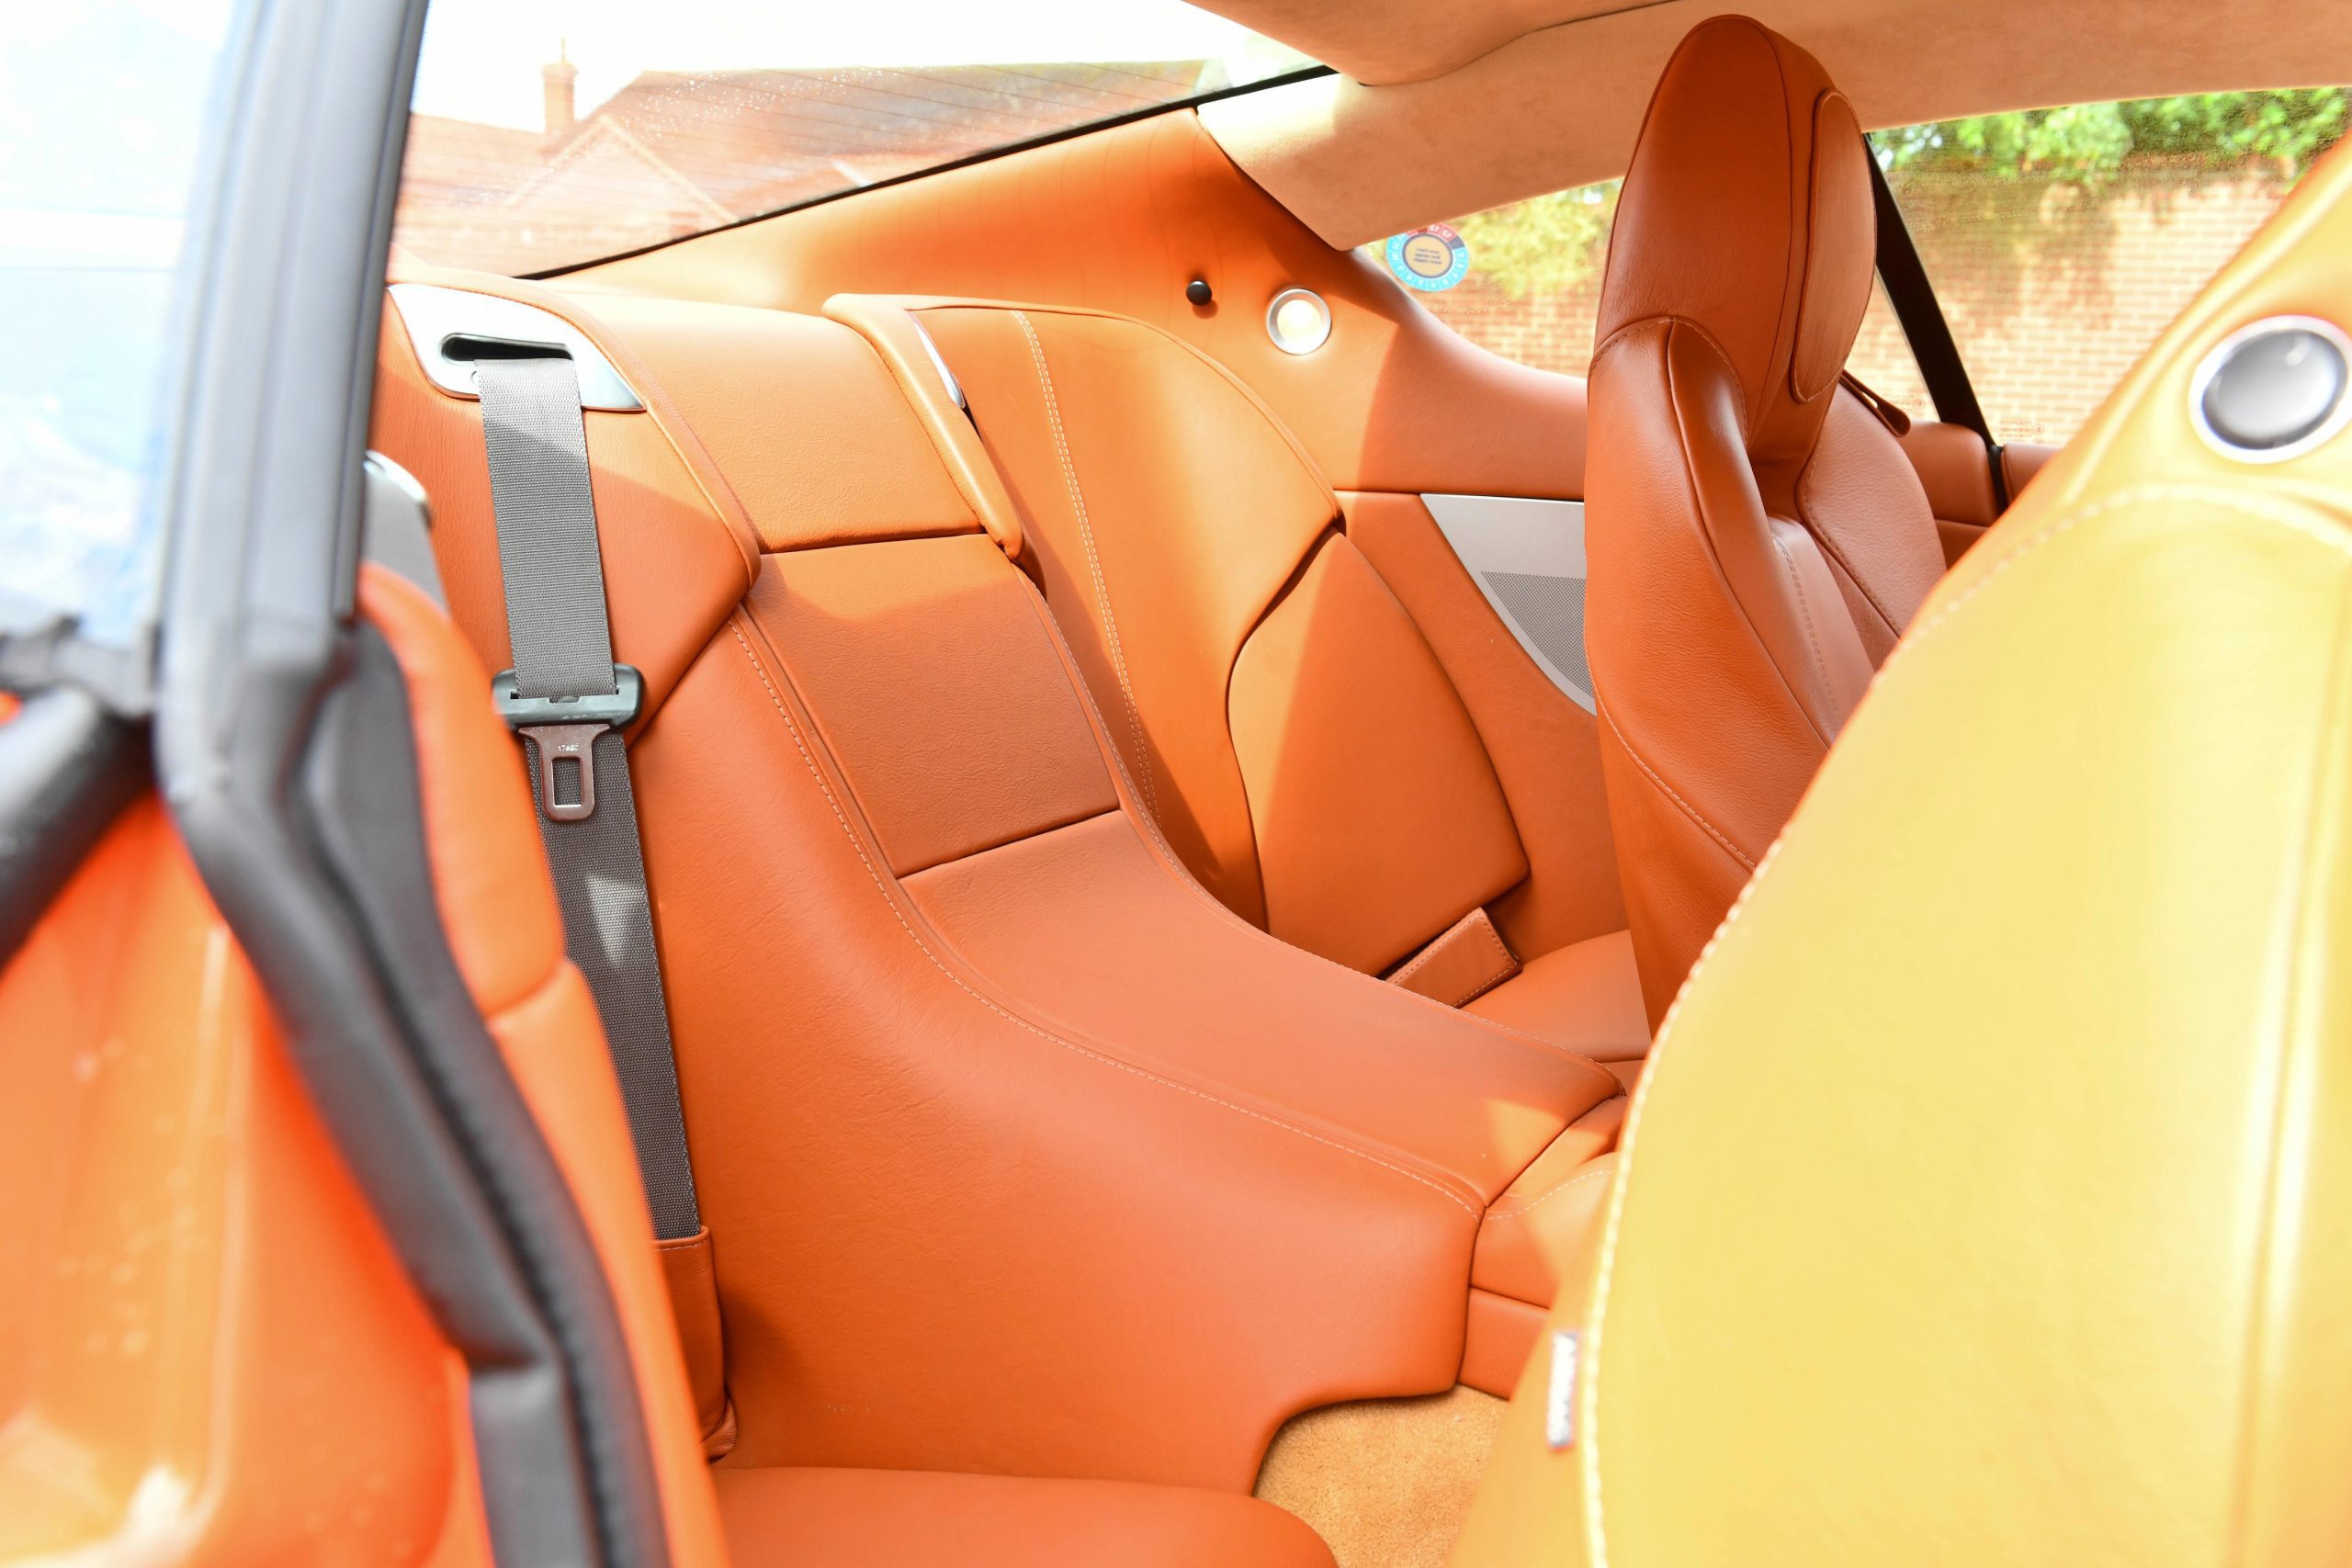 Interior of an Aston Martin DB9 coupe